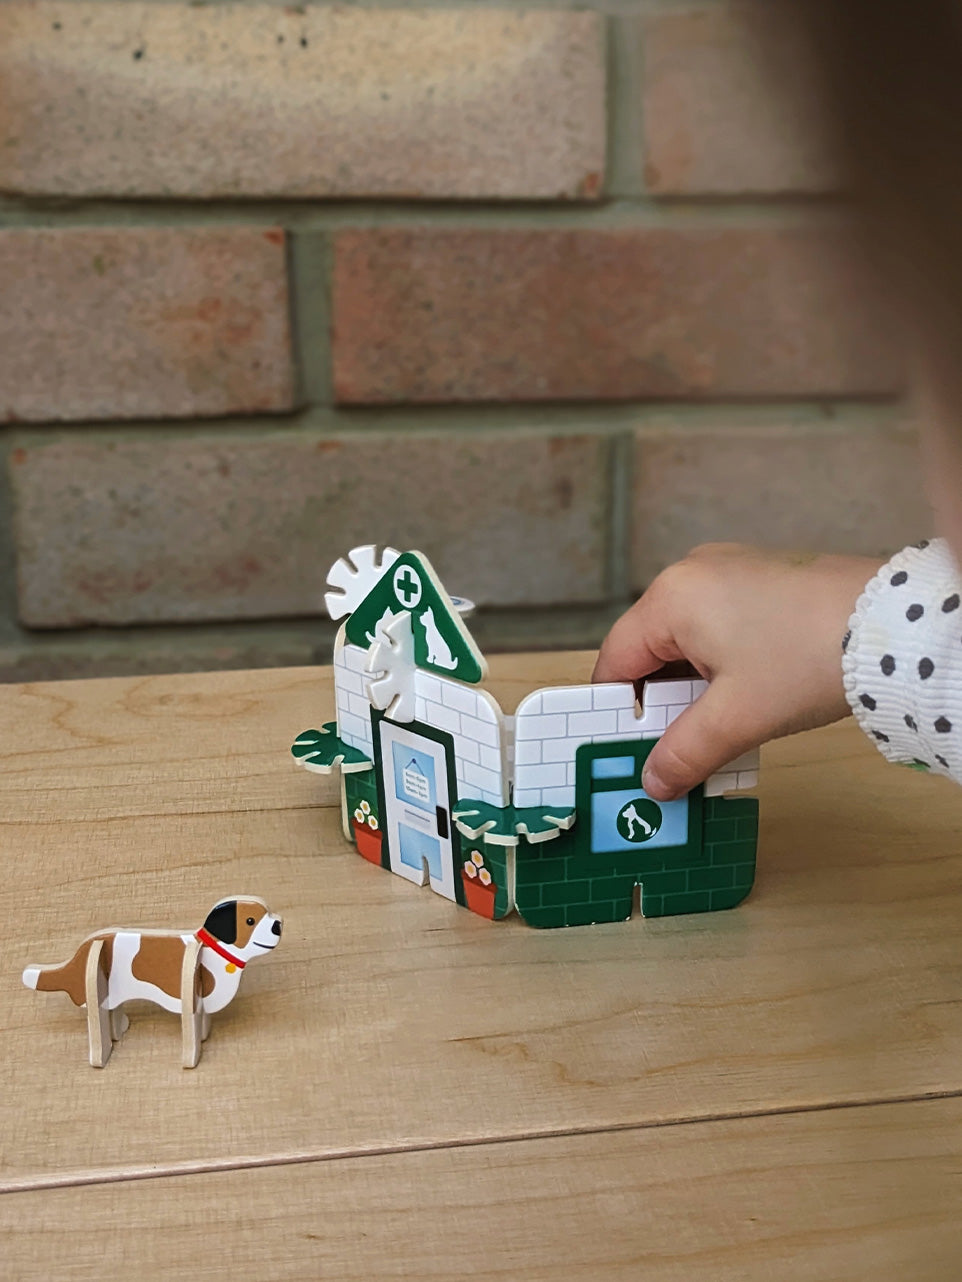 Animals Small World Play gift box, age 3-5